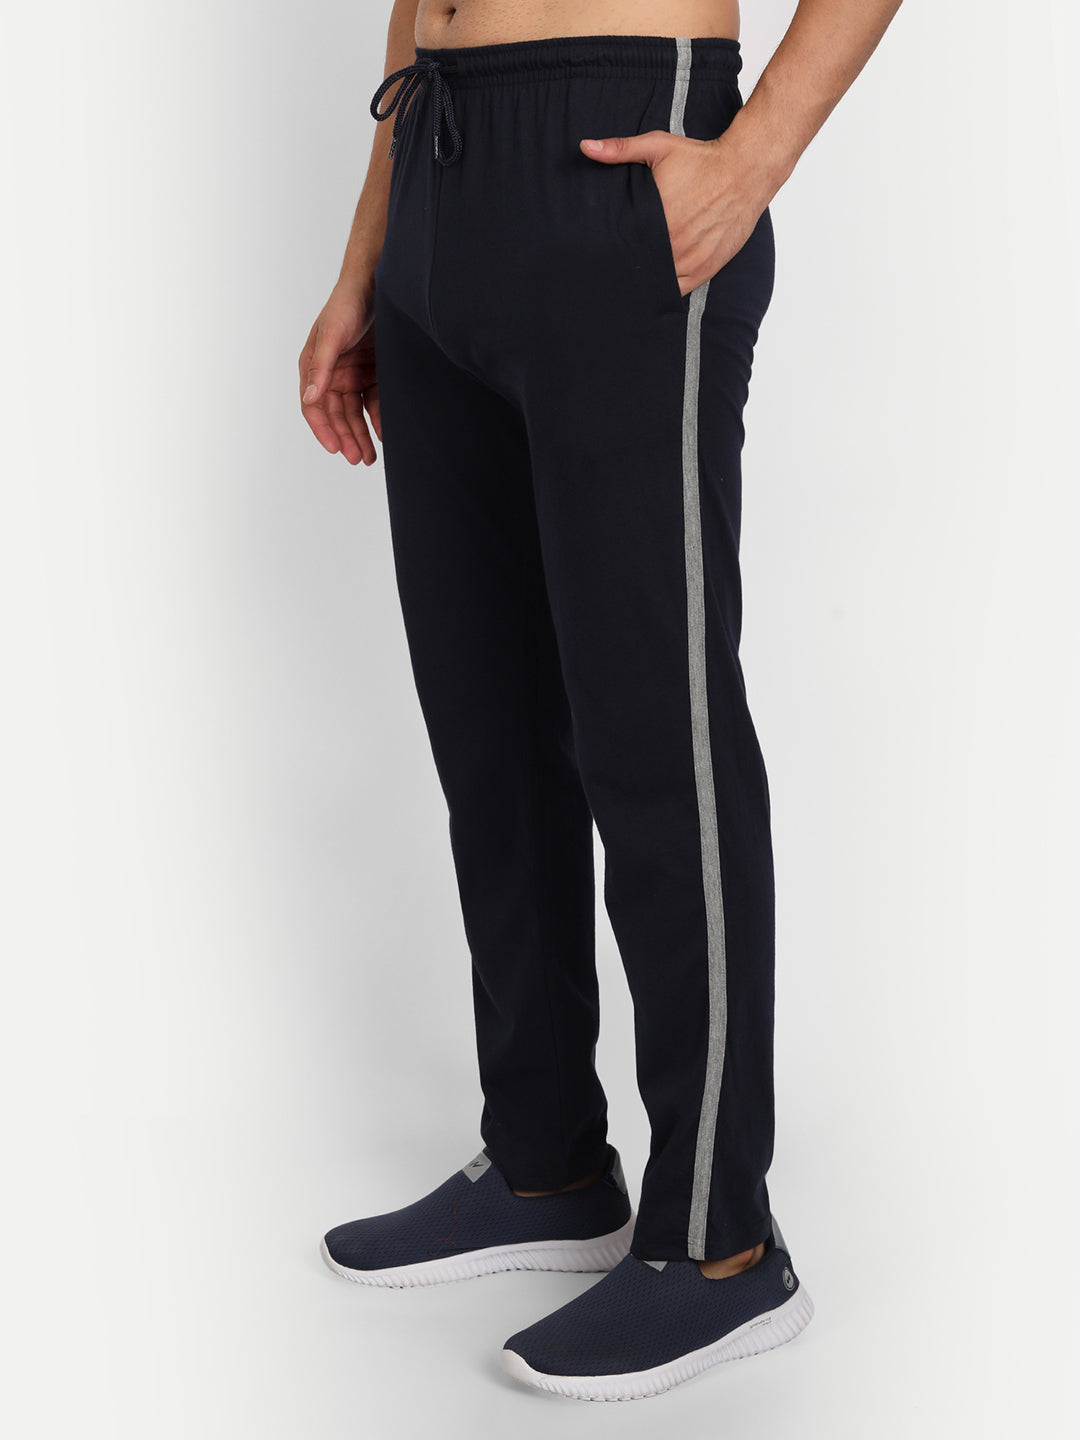 Adidas Mens Track Pants Clima Cool Black White 3 Stripes Pull On Size  Medium | eBay